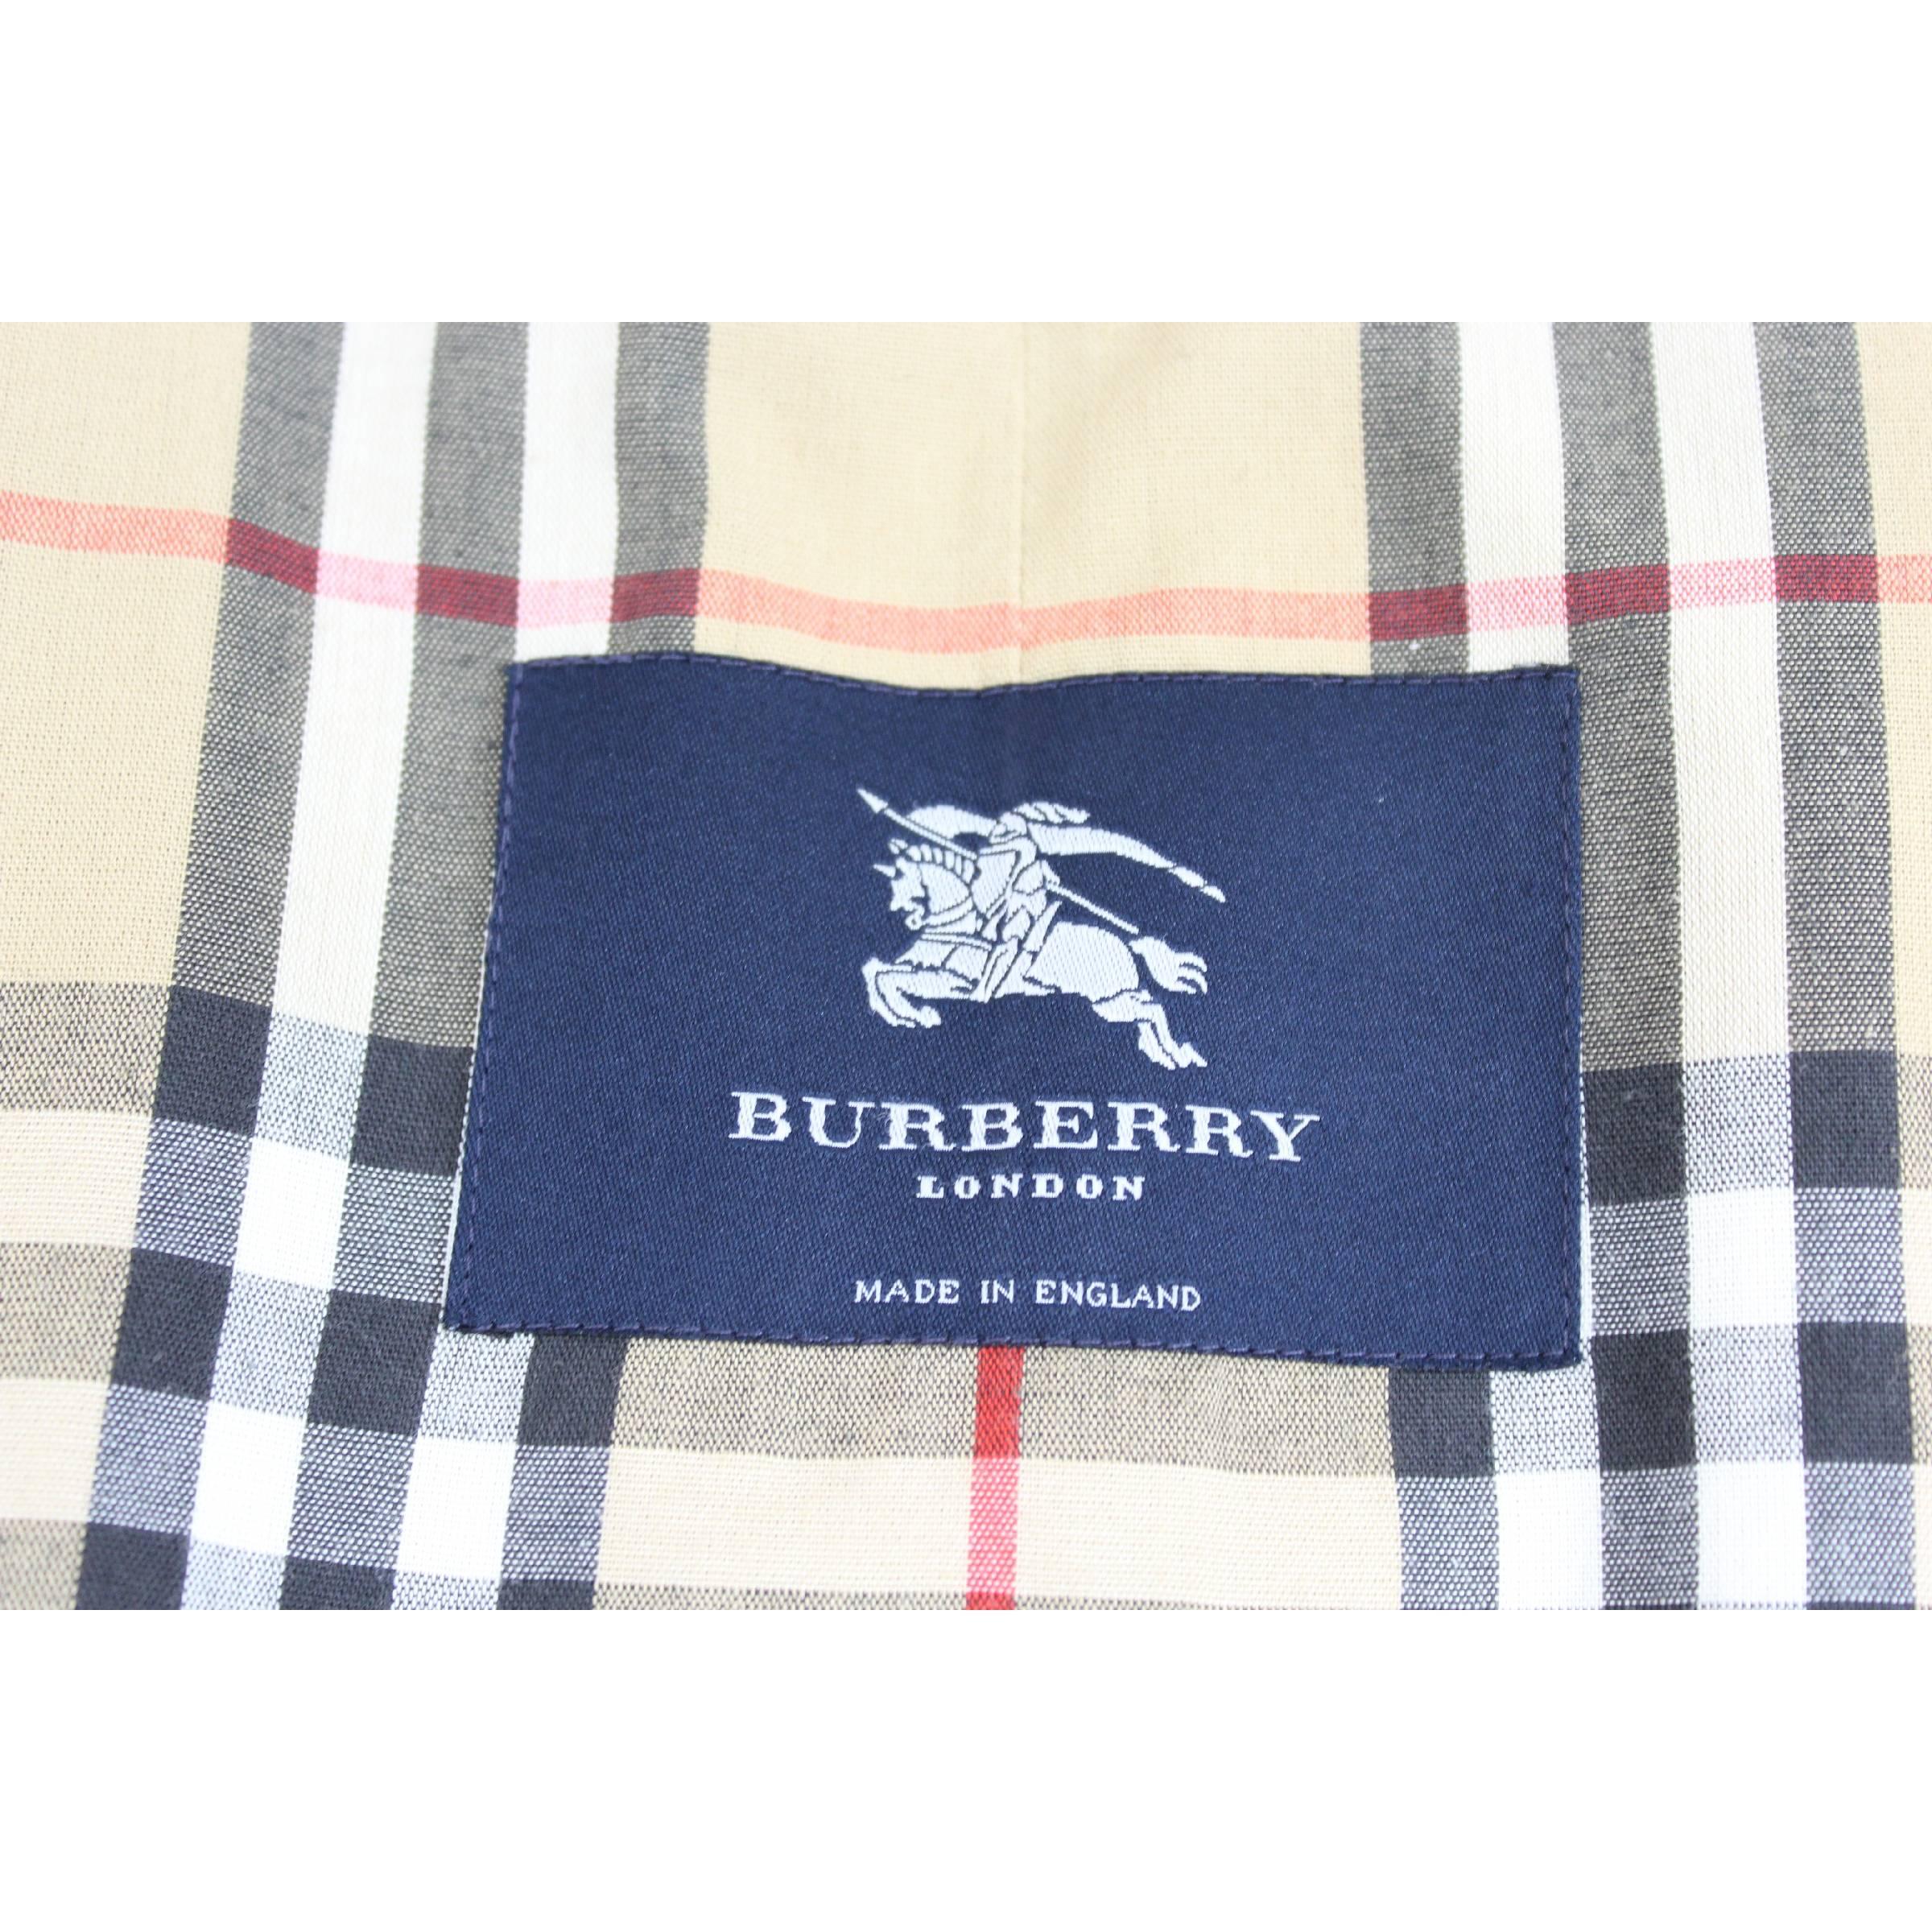  Burberry London Raincoat Trench Cotton Vintage Beige For Sale 1